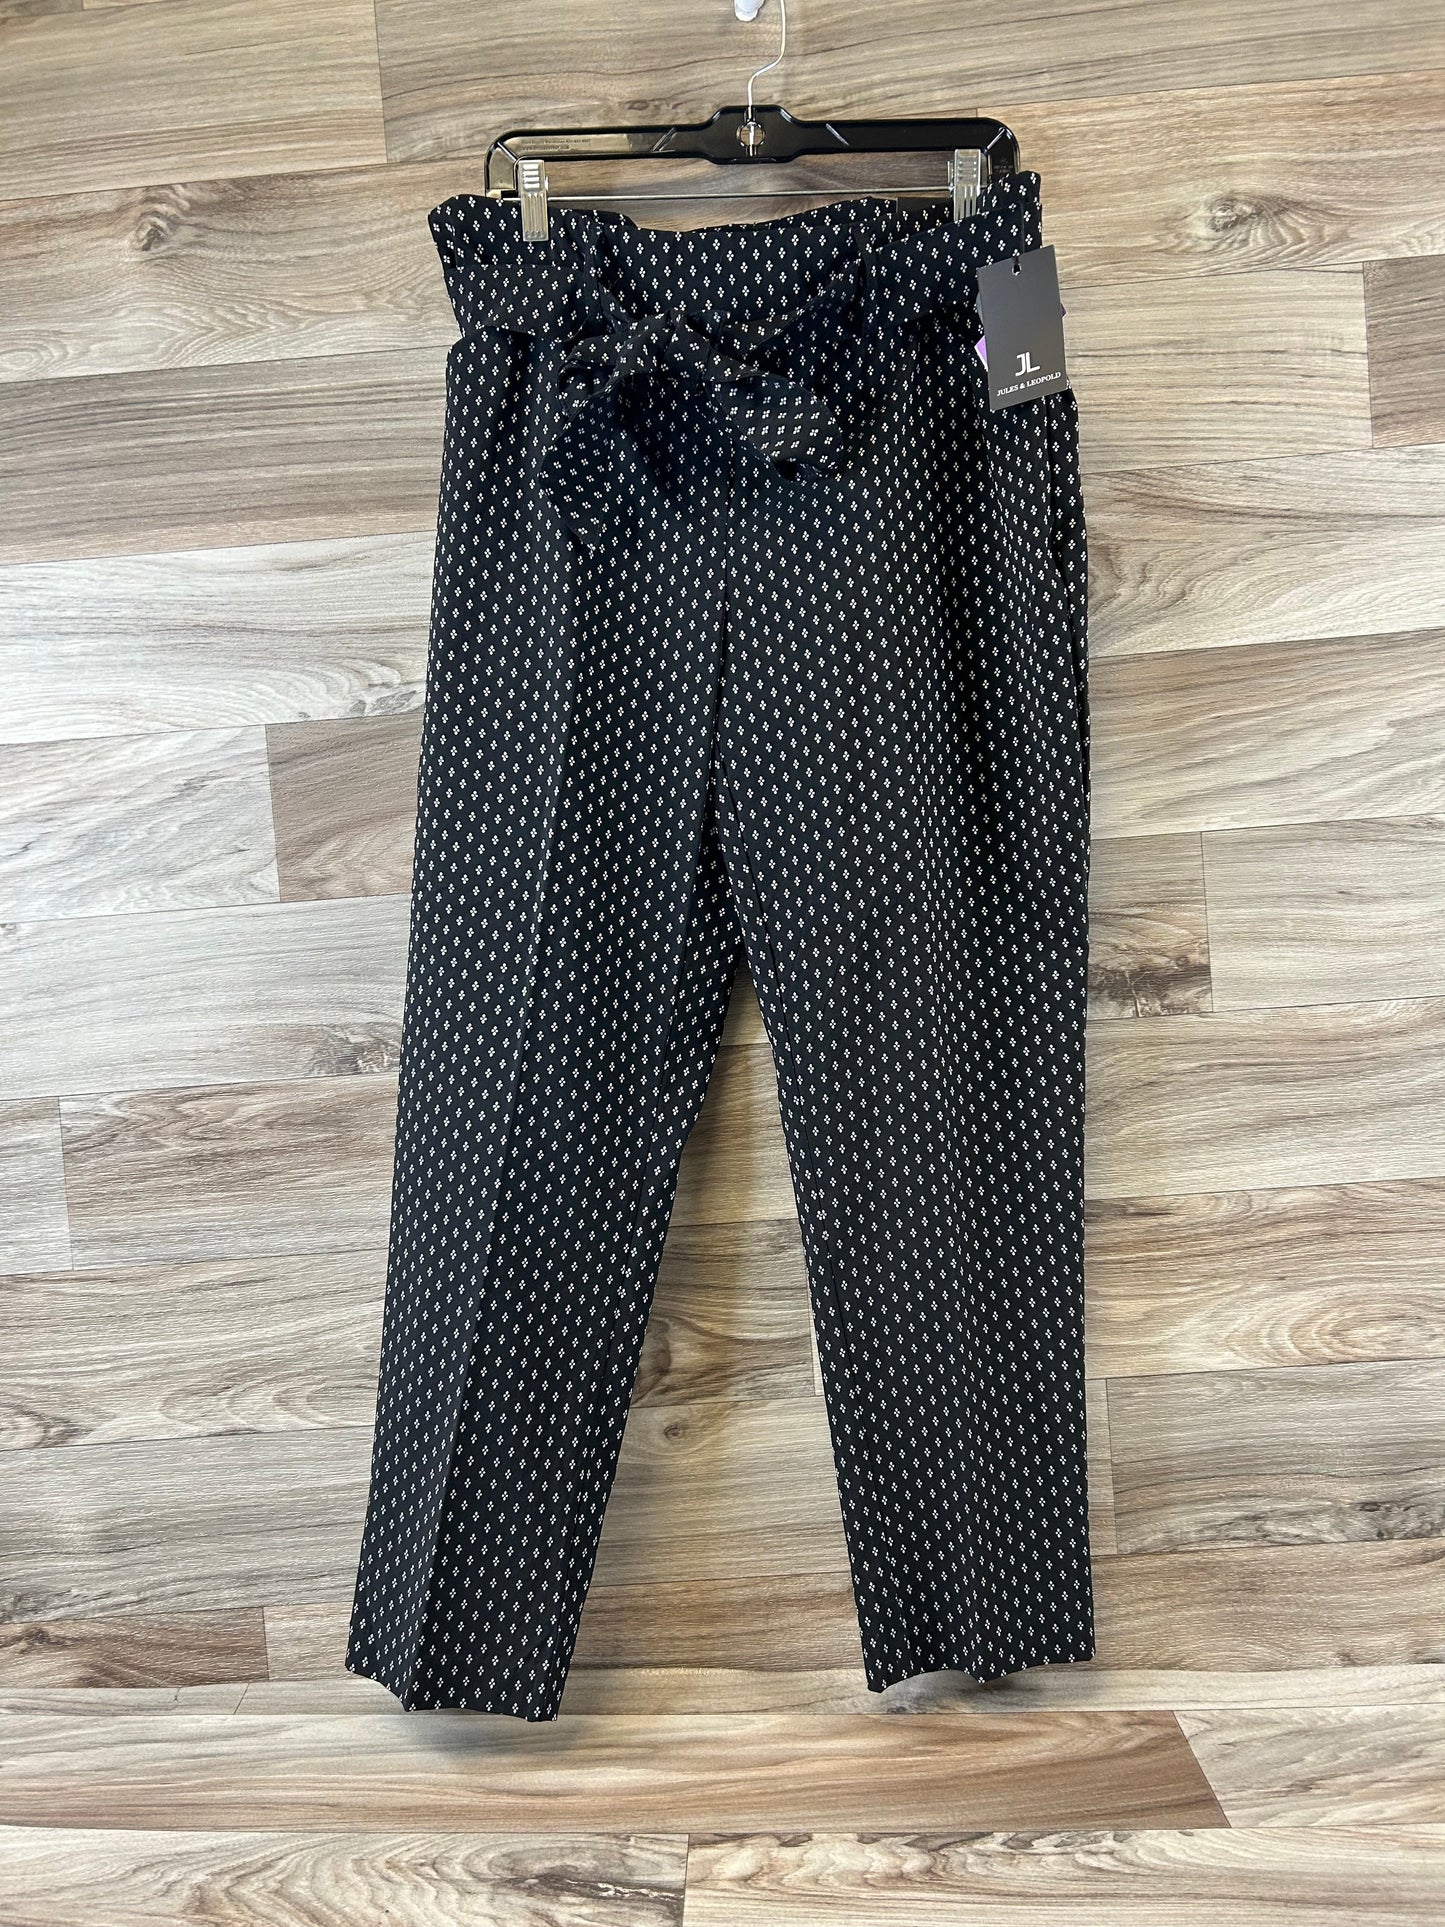 Black & White Pants Dress Jules & Leopold, Size 14